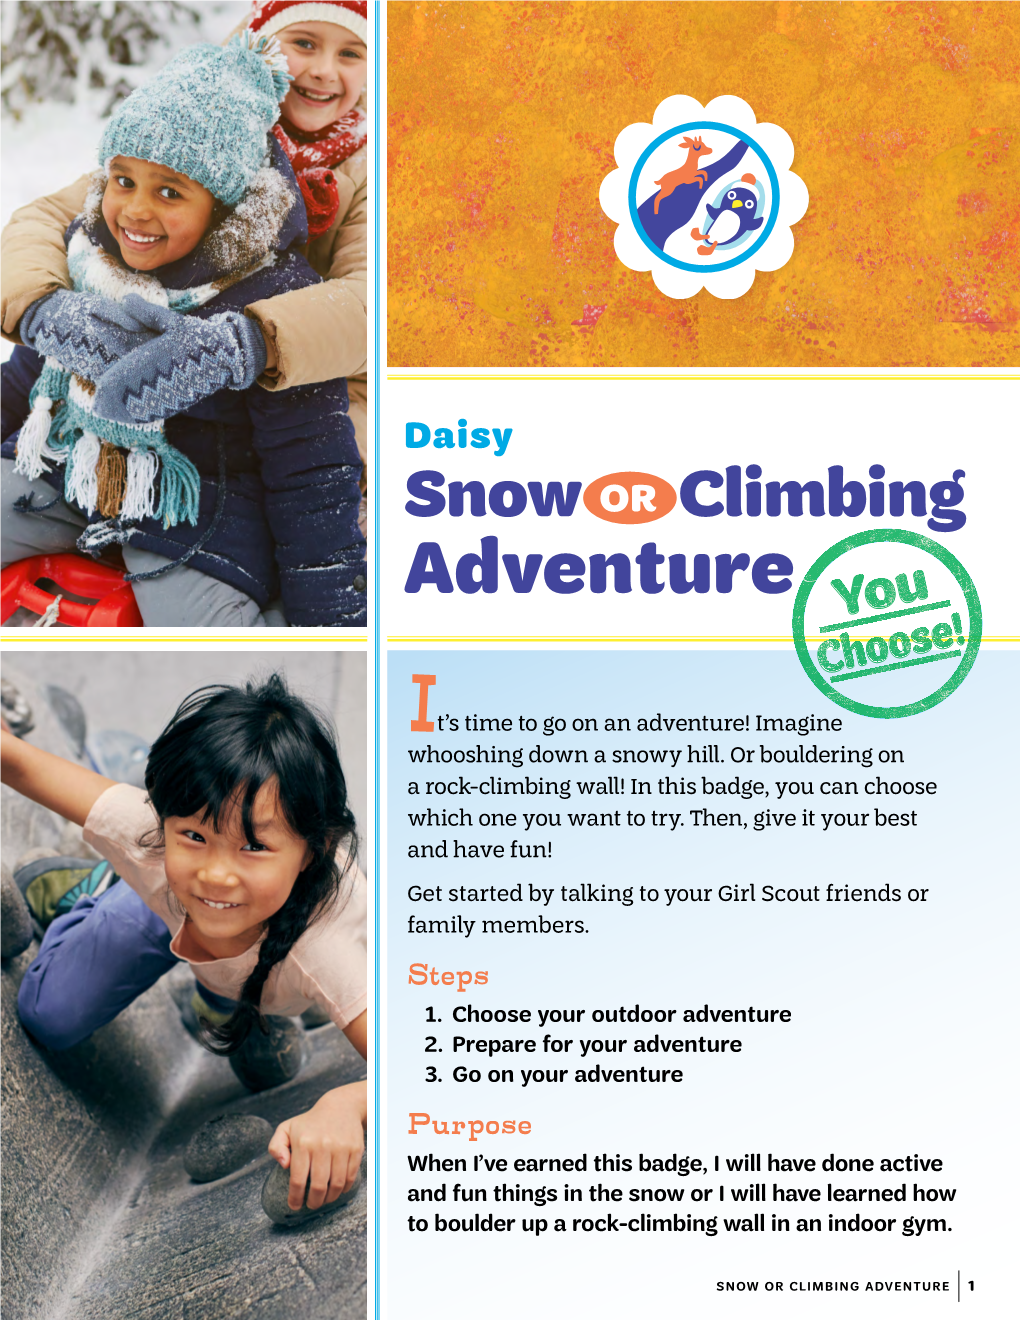 Daisy Snow OR Climbing Adventure